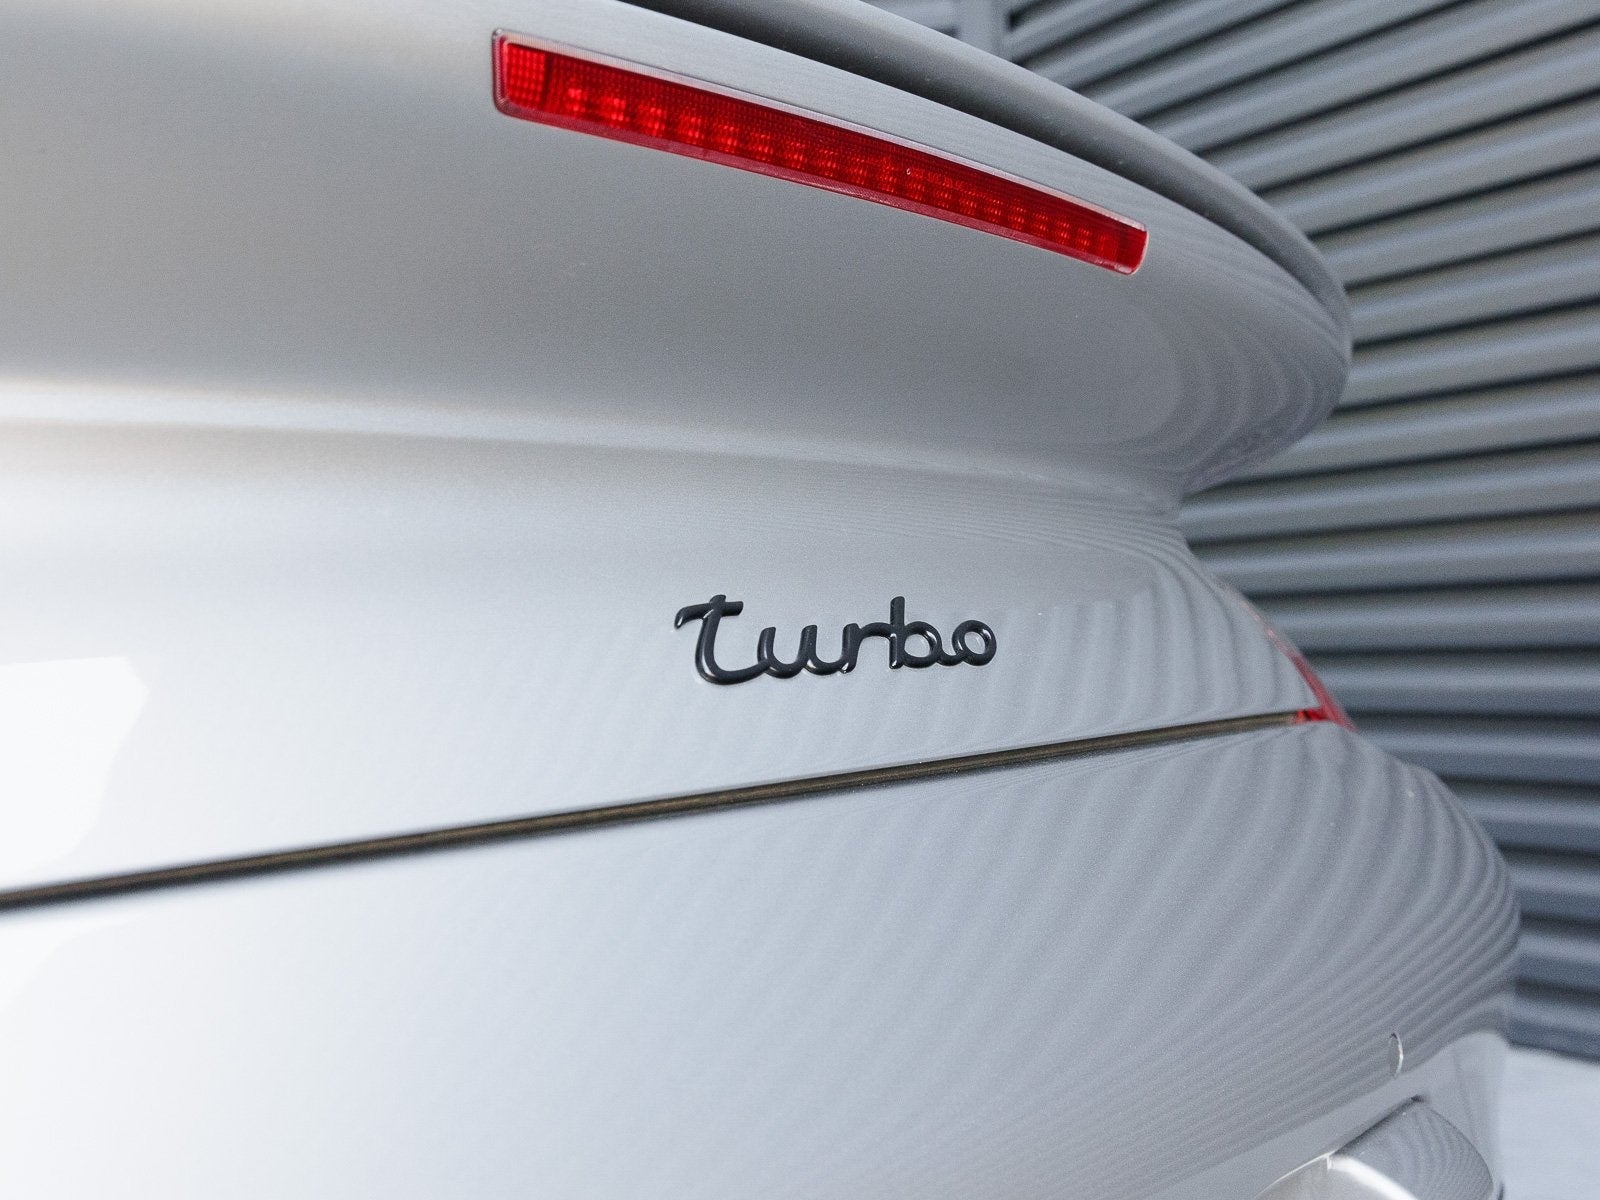 2011 Porsche 911 Turbo